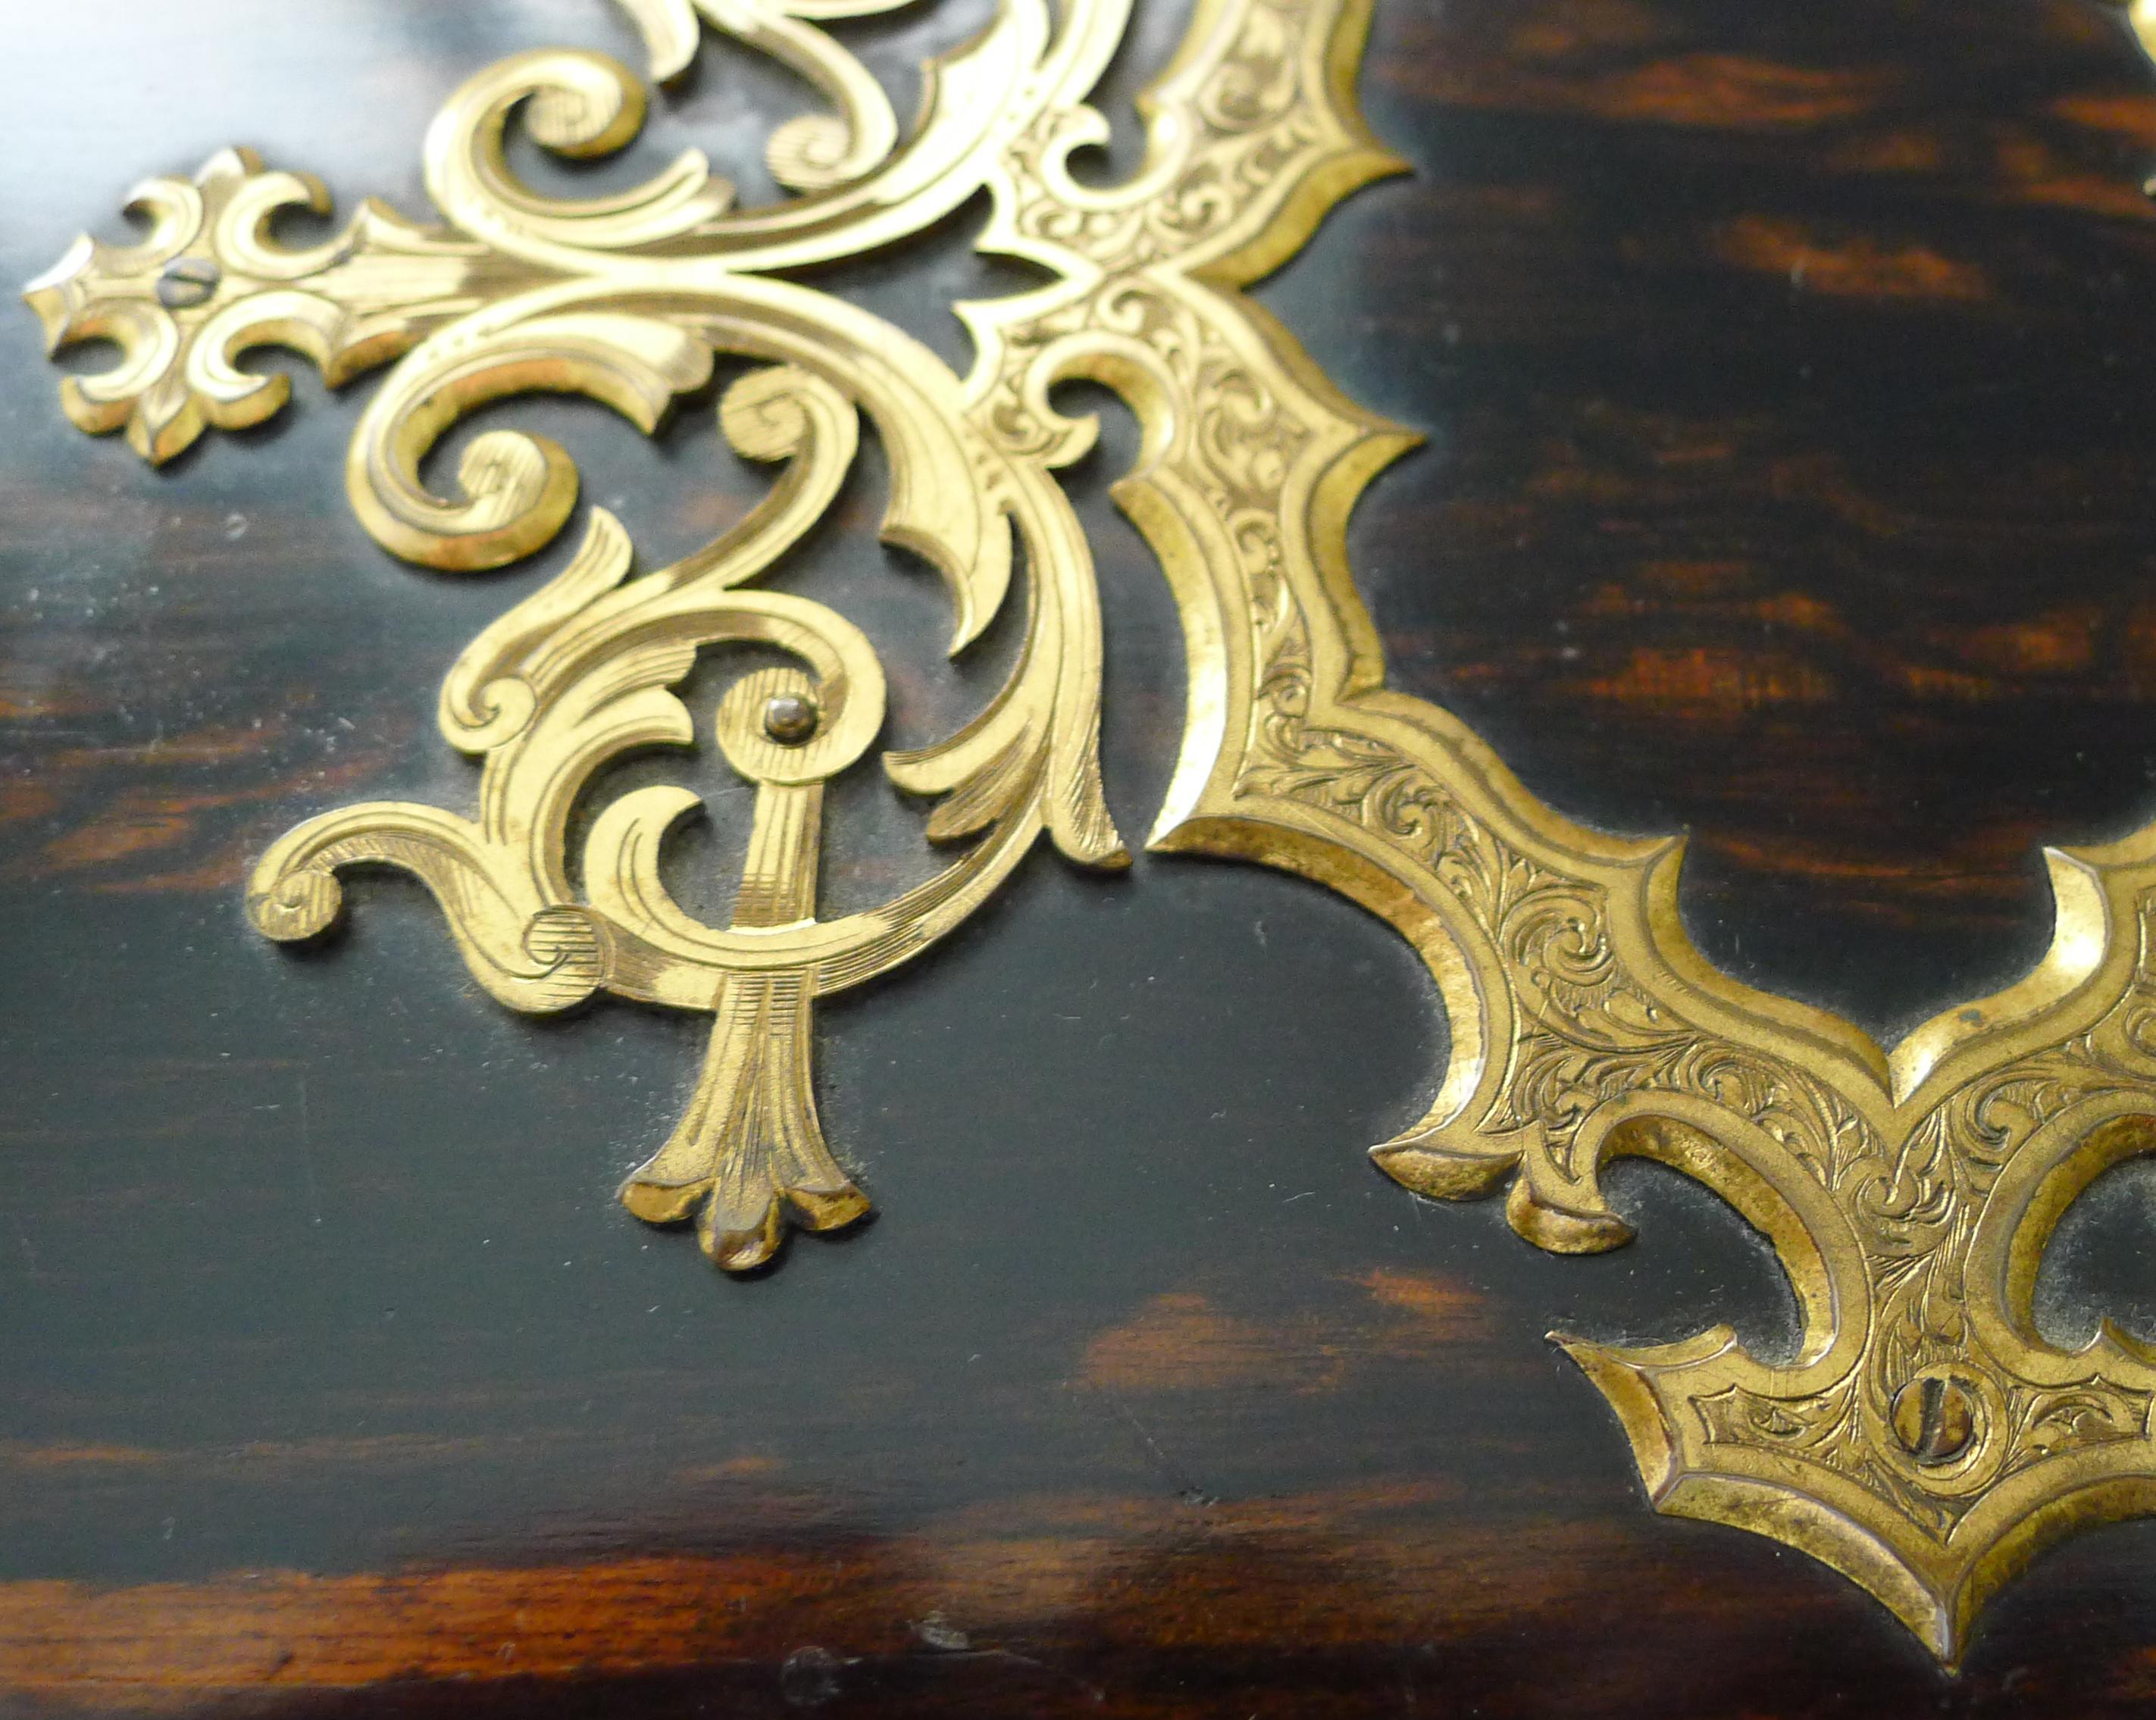 Fine Antique English Gilded Bronze Mounted Coromandel Lap Desk In Good Condition For Sale In Bath, GB